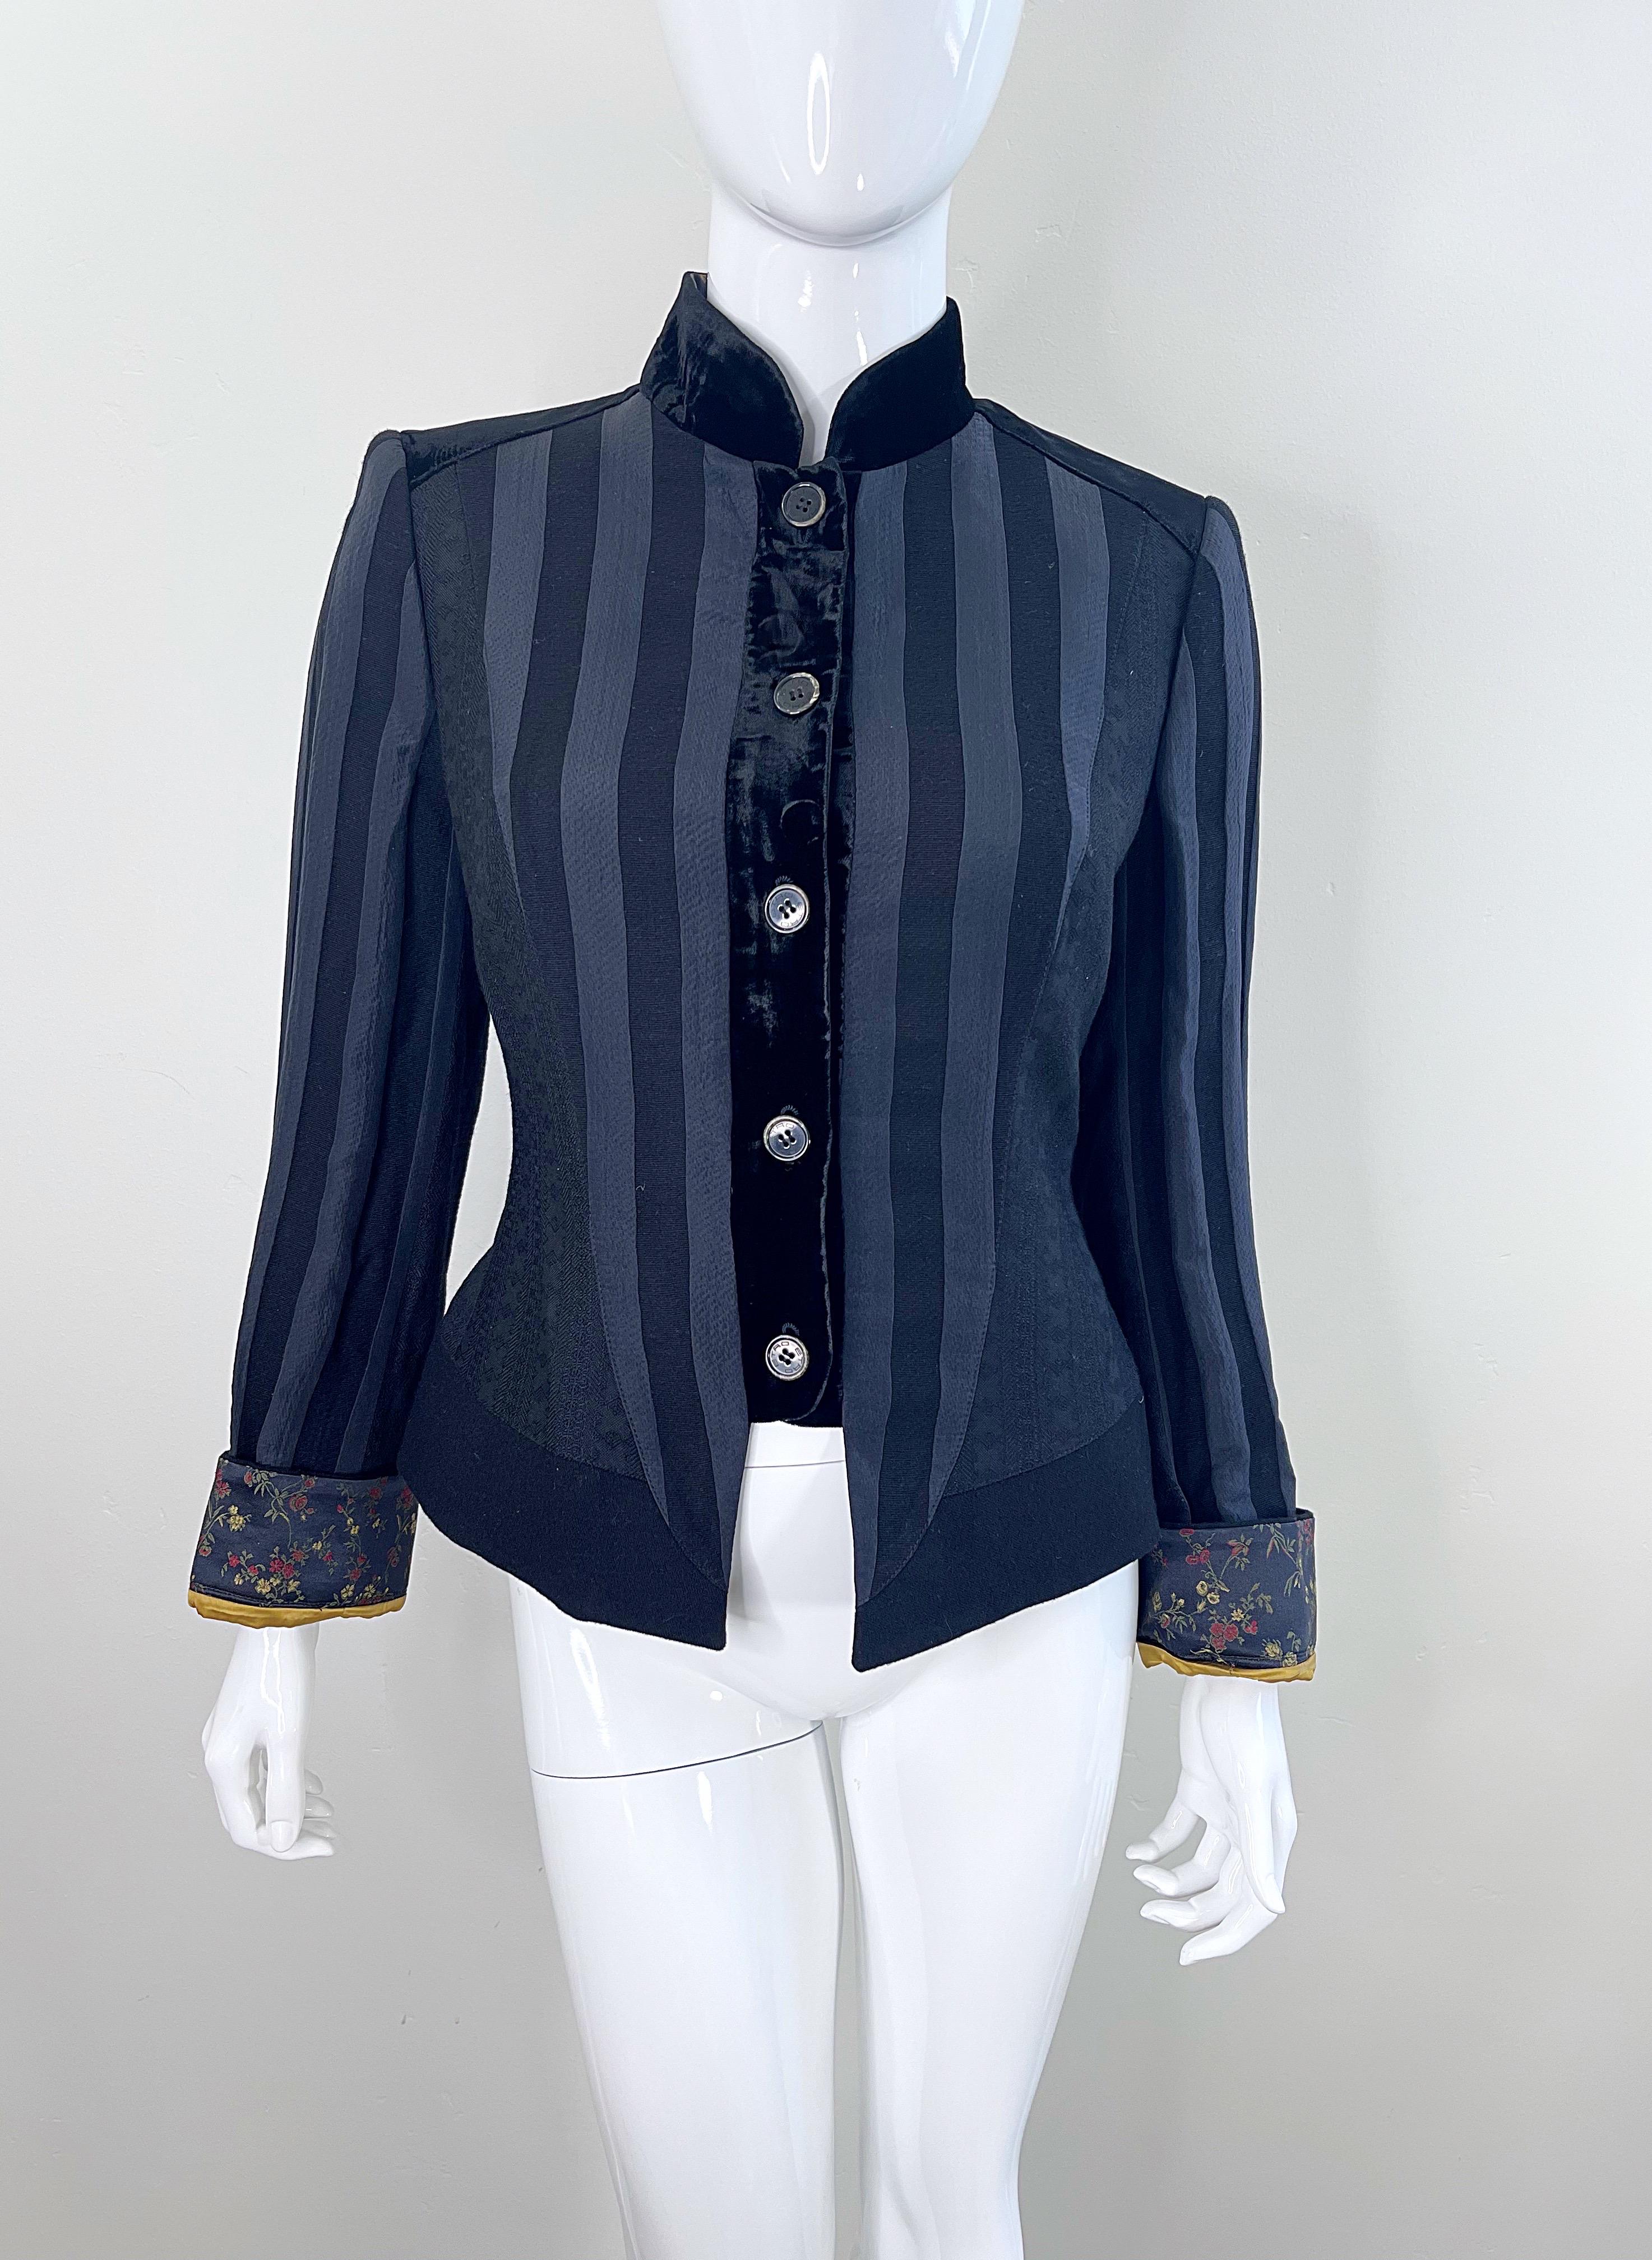 Etro Black Silk Blend Size 44 / US 8 Military Inspired Jacket w/ Flower Cuffs For Sale 2